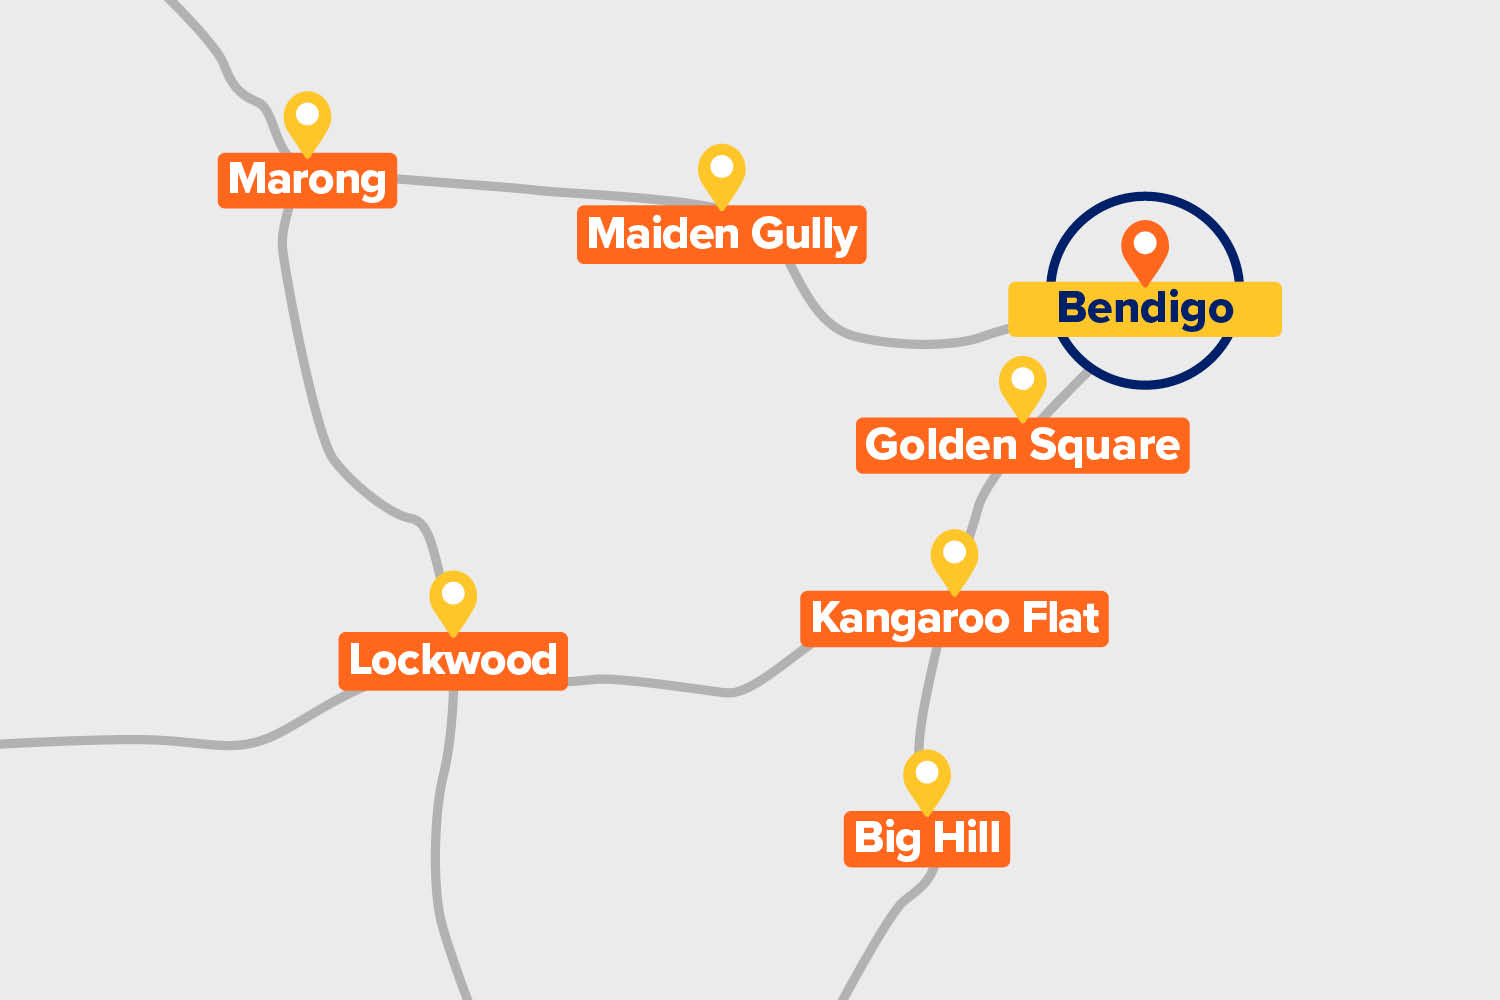 Kangaroo Flat, Golden Square, Maiden Gully, Marong, Lockwood and Big Hill map